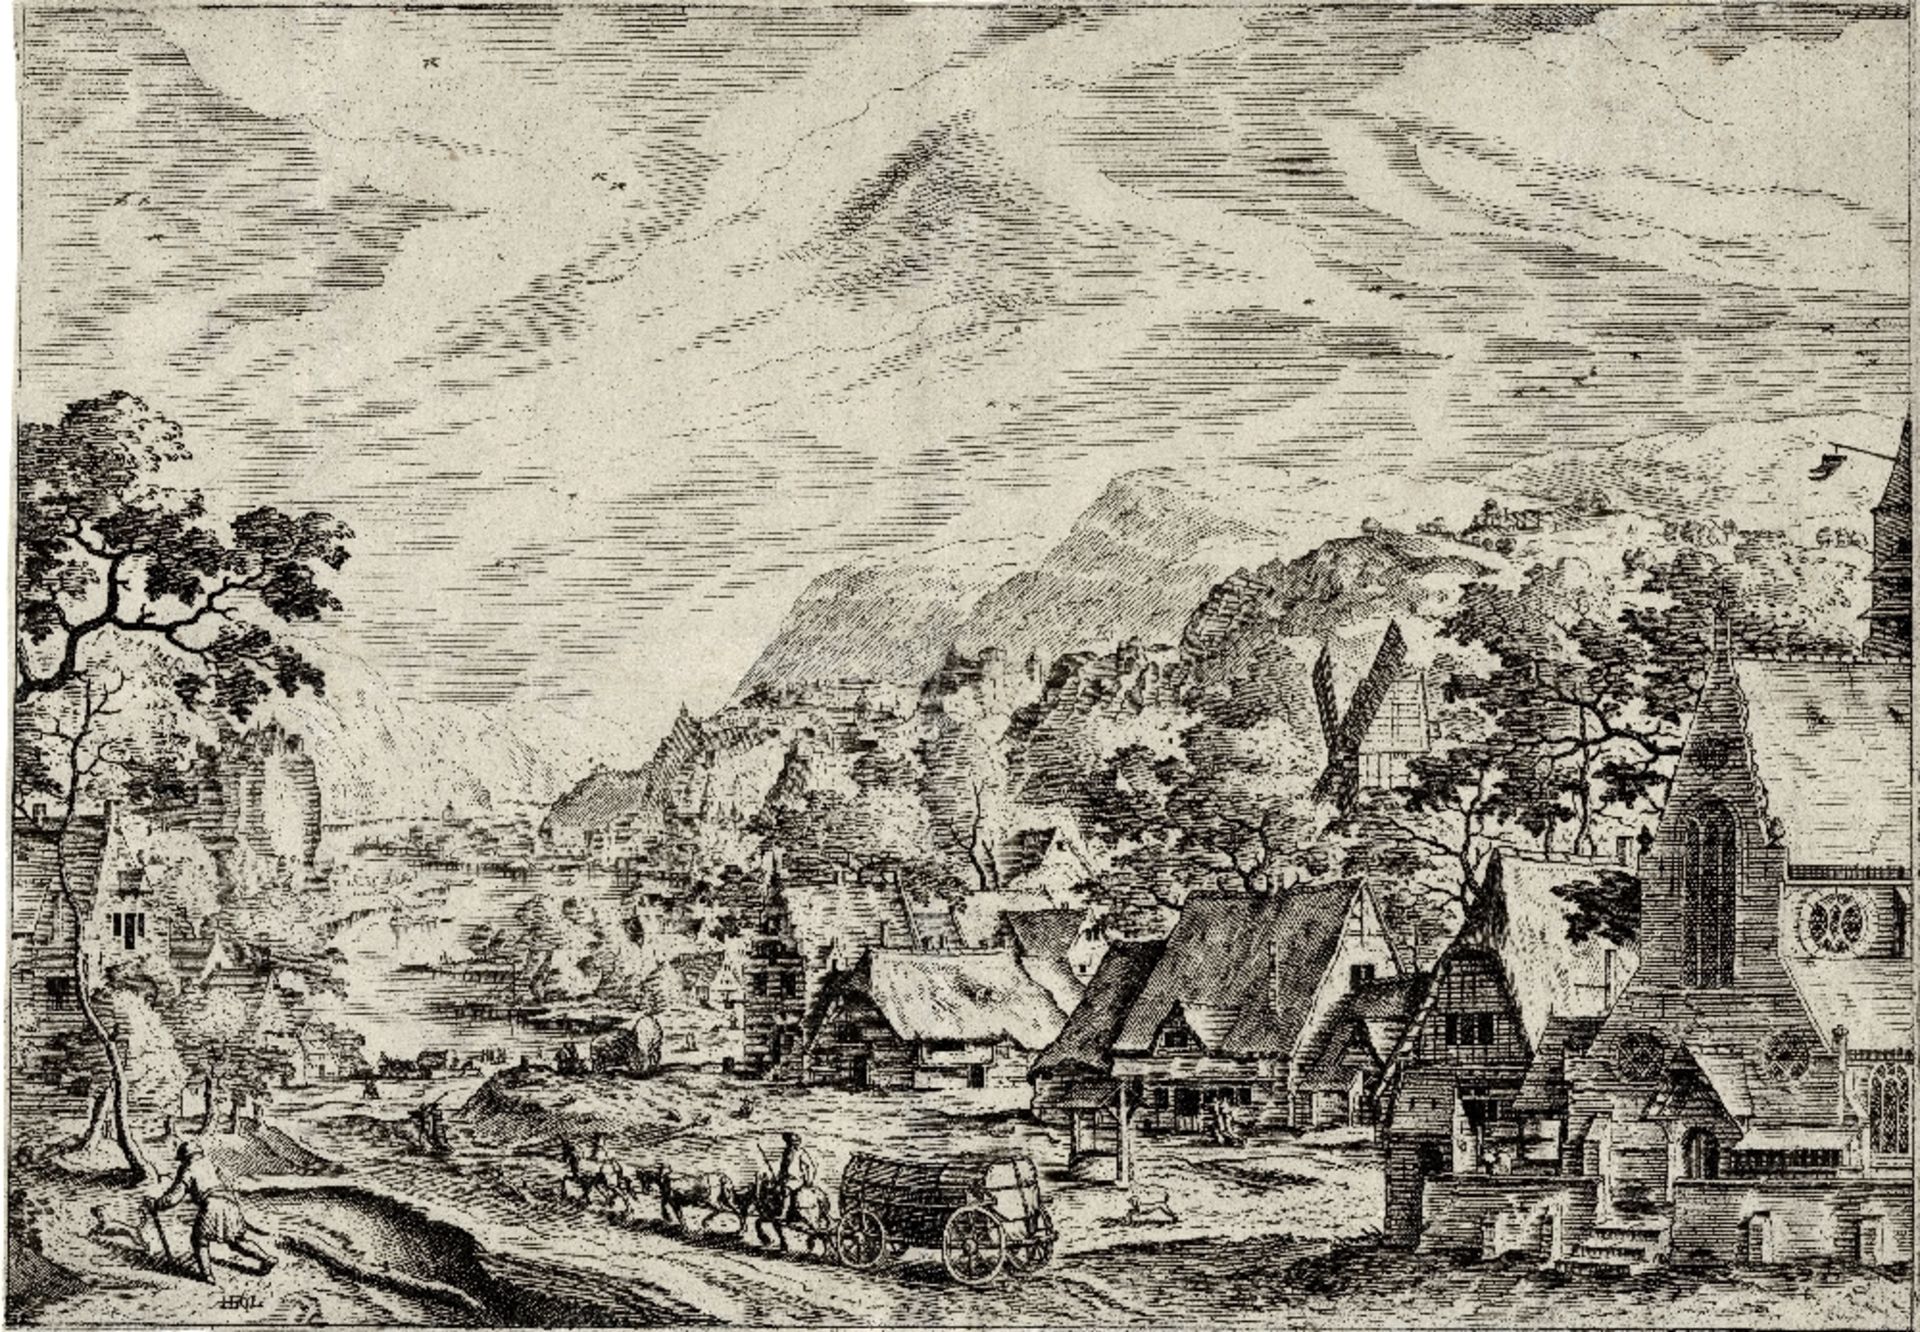 Hans Bol, van Doetecum brothers - Flemish Village with Wind Mill - 1562